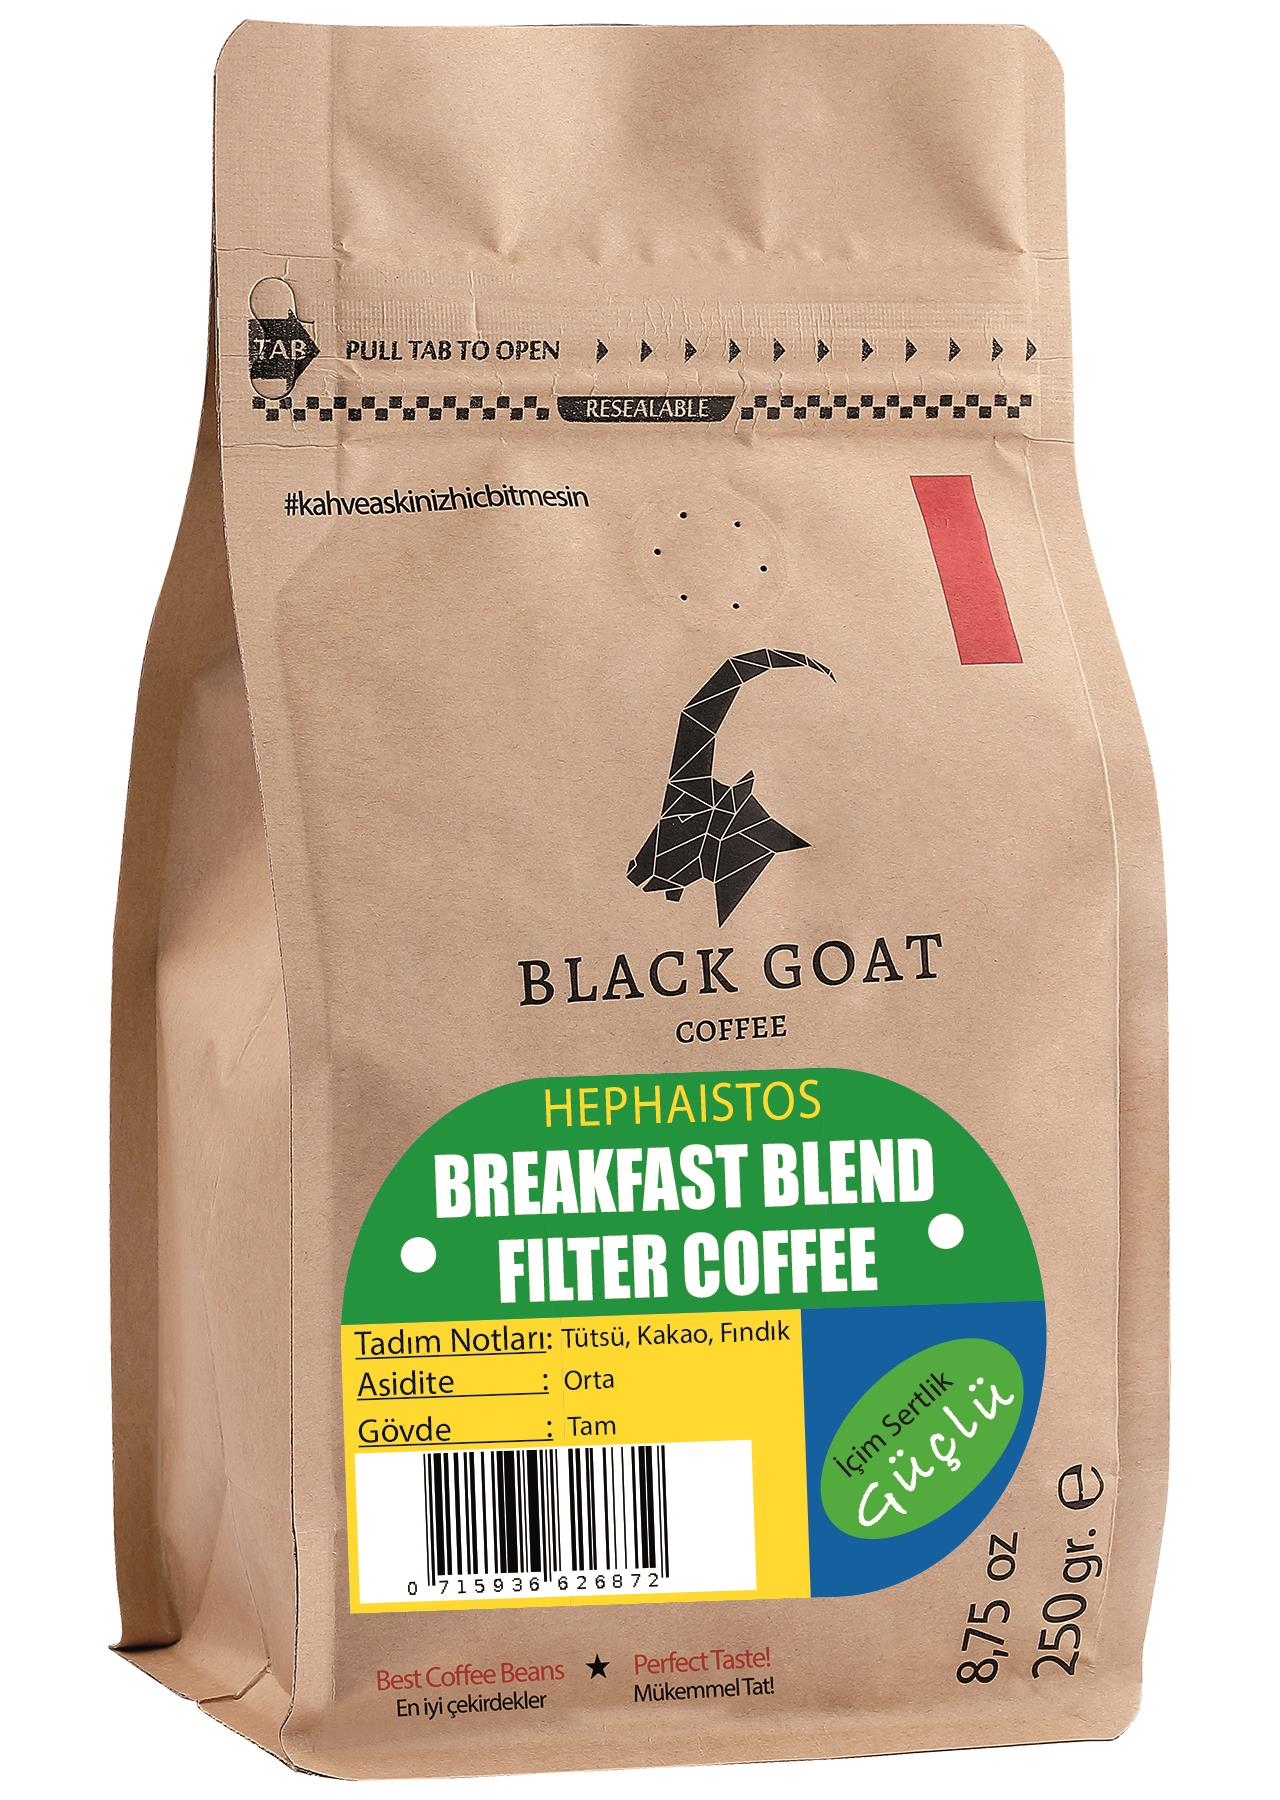 Black Goat Breakfast Blend - Yöresel Çekirdek Filtre Kahve Hephaistos